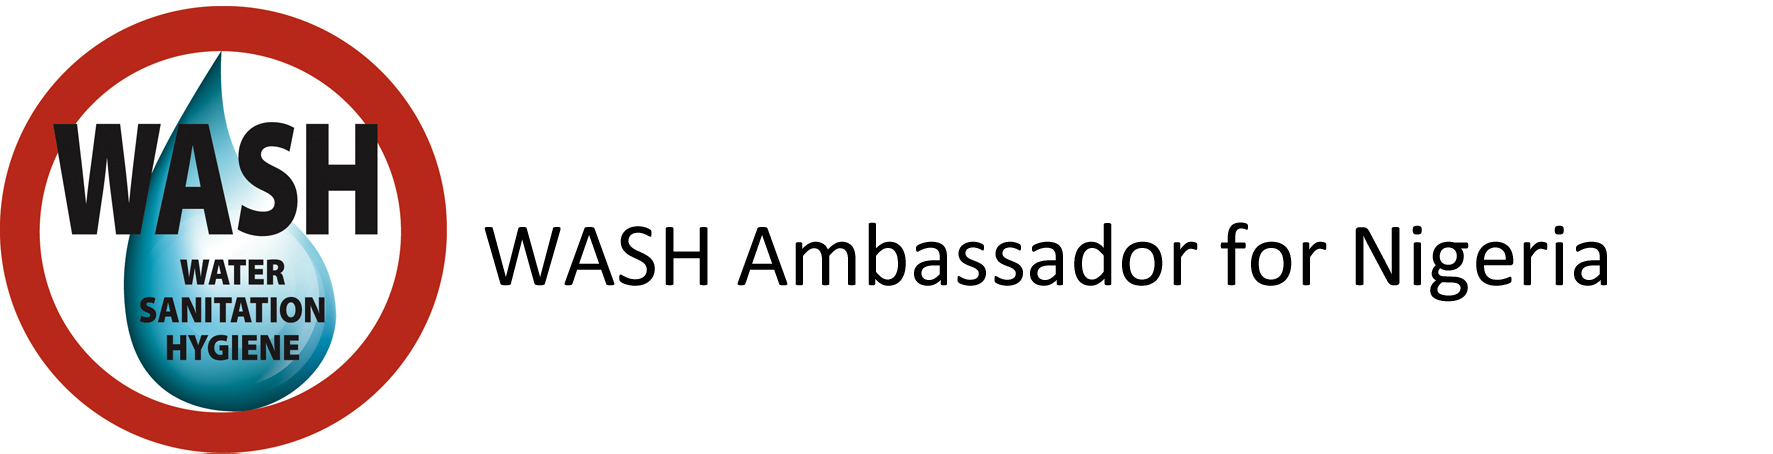 LOGO WASH Ambassador for Nigeria_updated